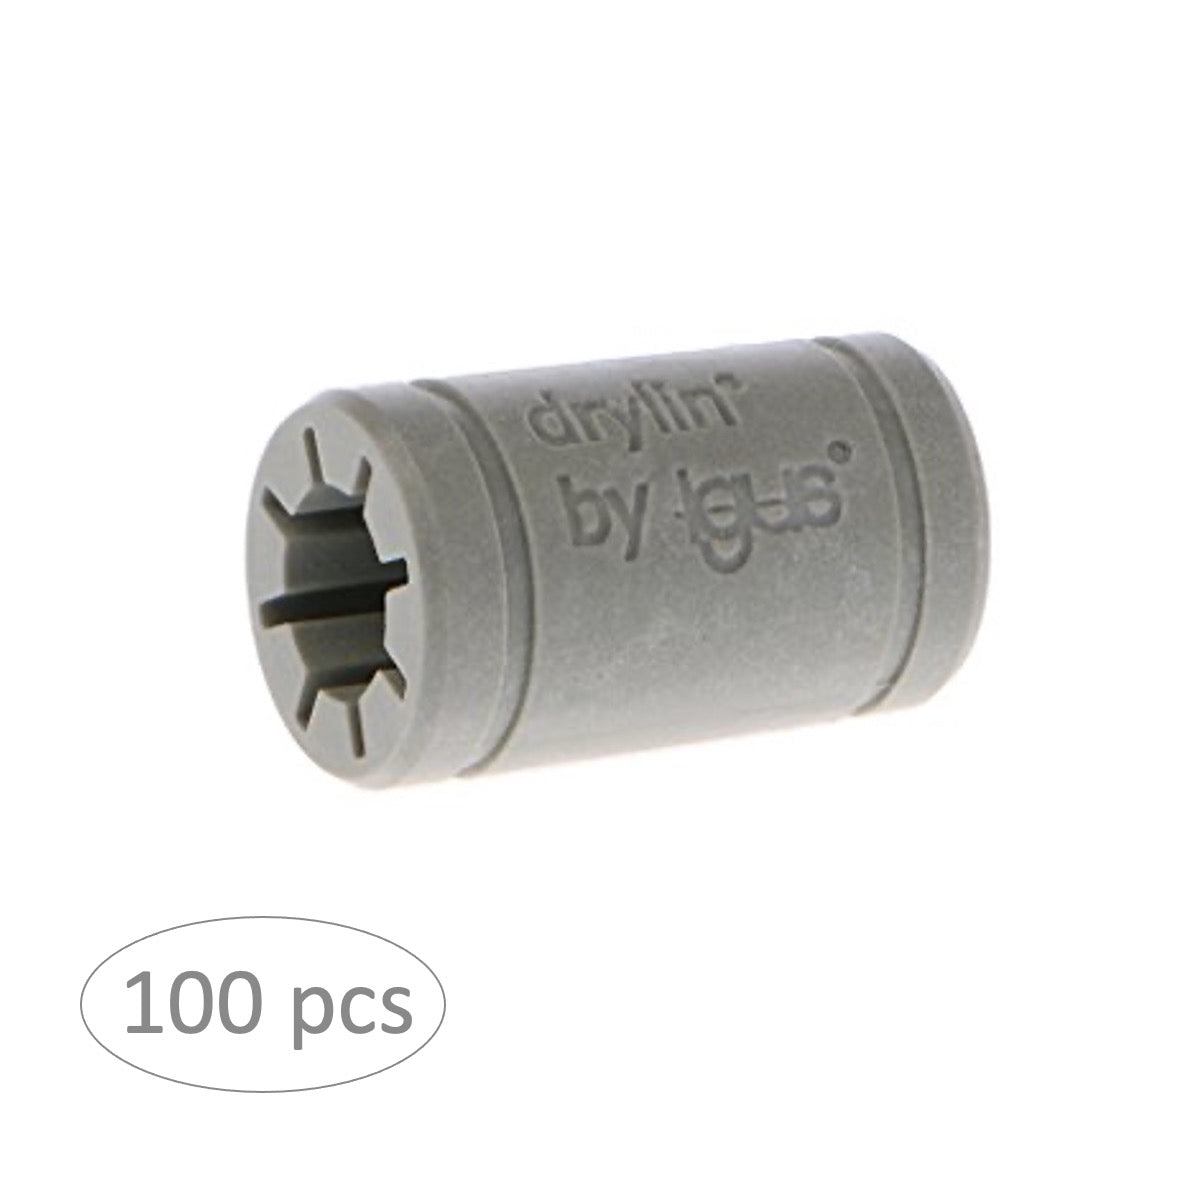 Igus Drylin R Solid Polymer Linear Slide LM8UU Bearing, RJ4JP-01 - 8mm Shaft (100 pack)